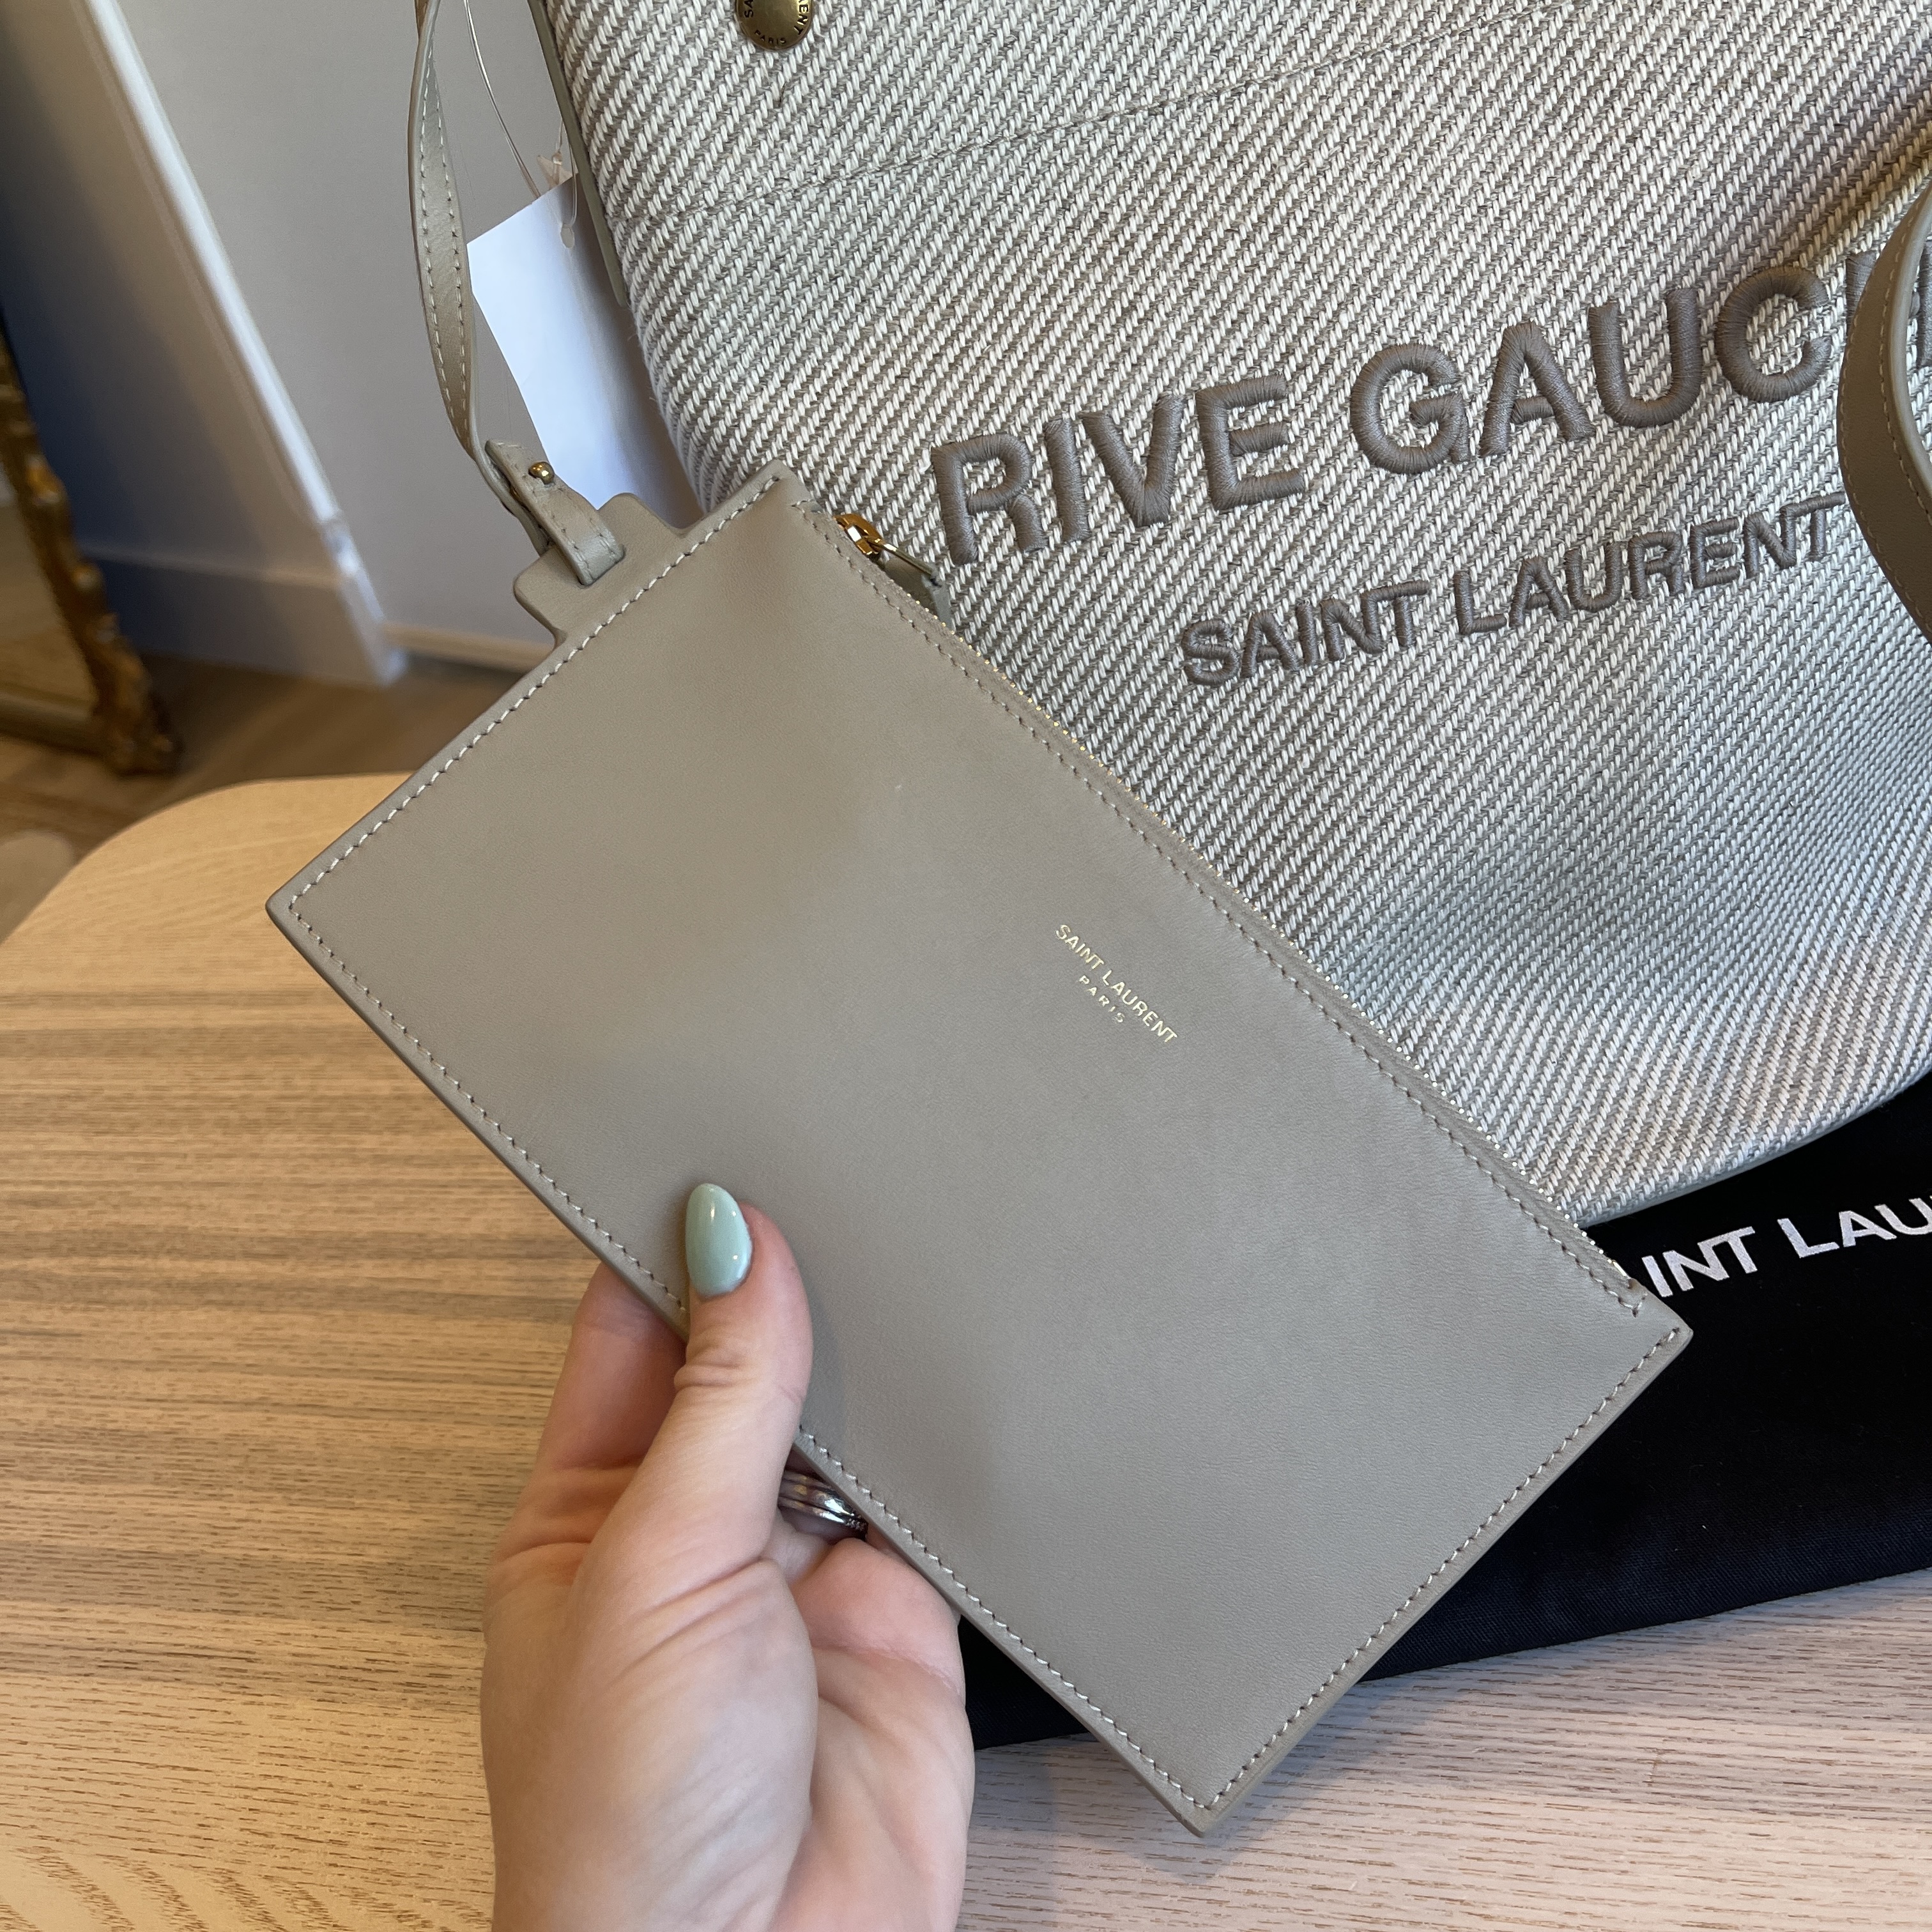 SAINT LAURENT RIVE GAUCHE BUCKET BAG – Baltini